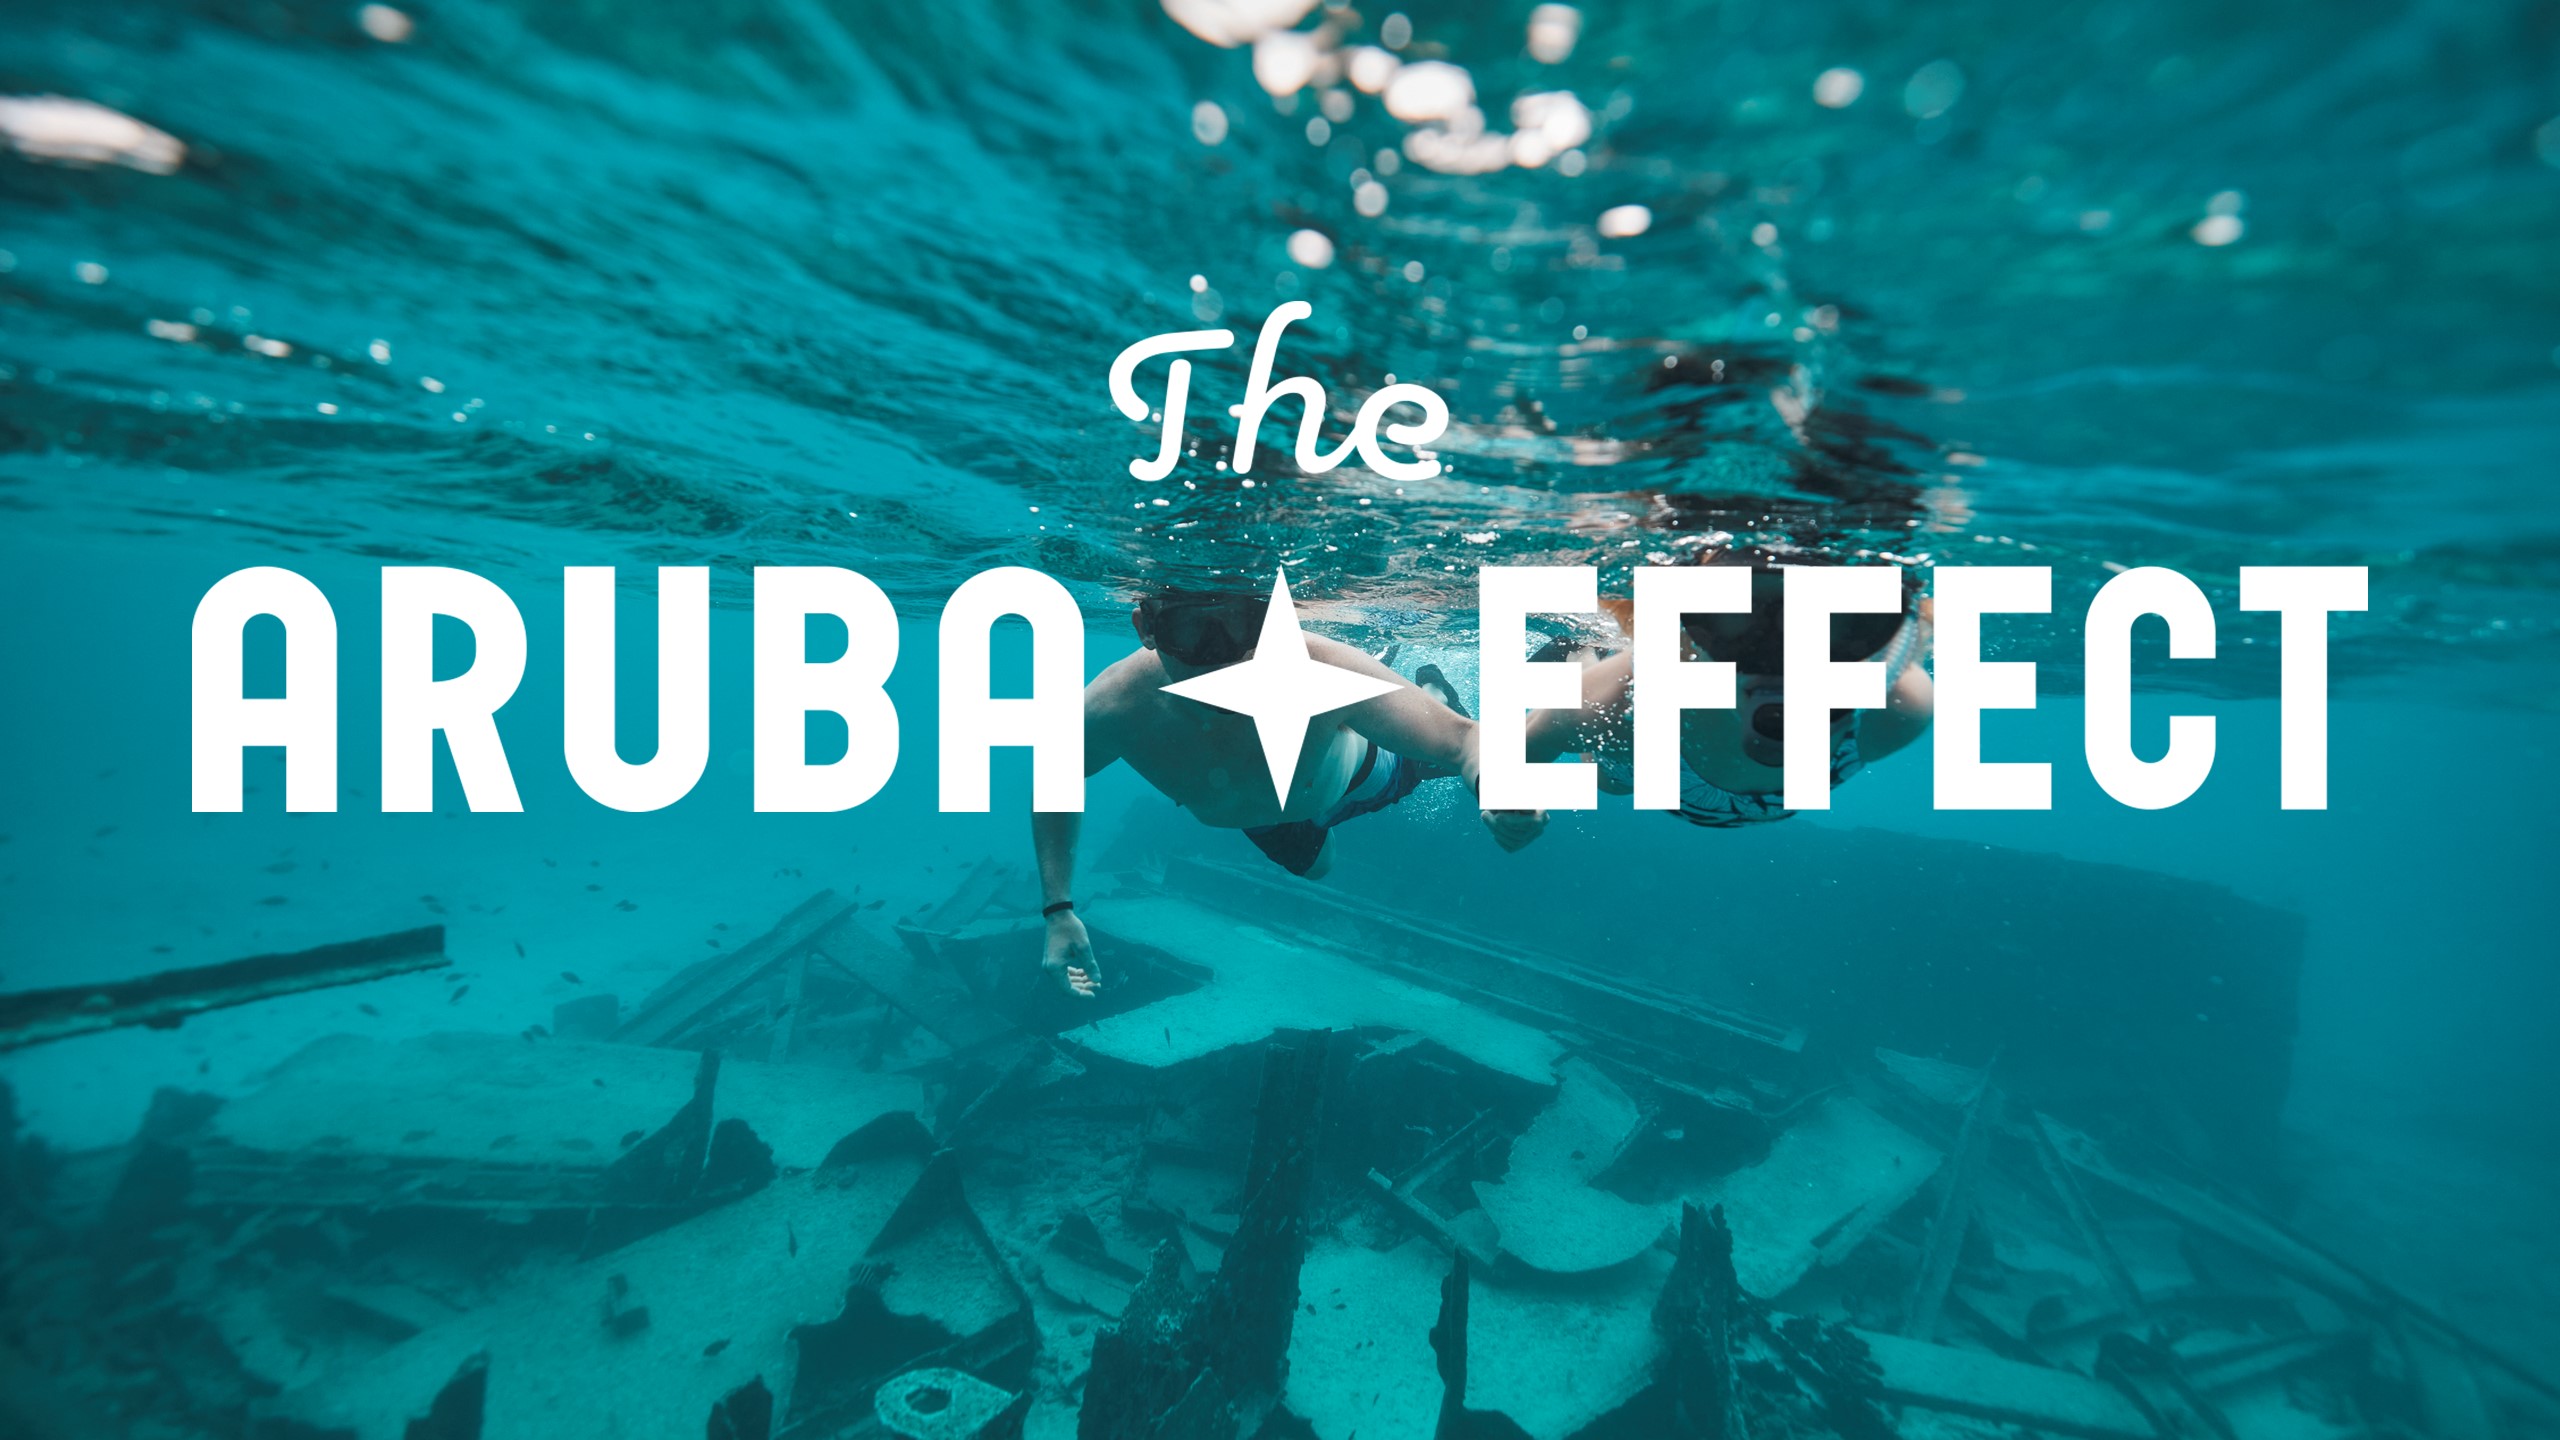 The Aruba Effect